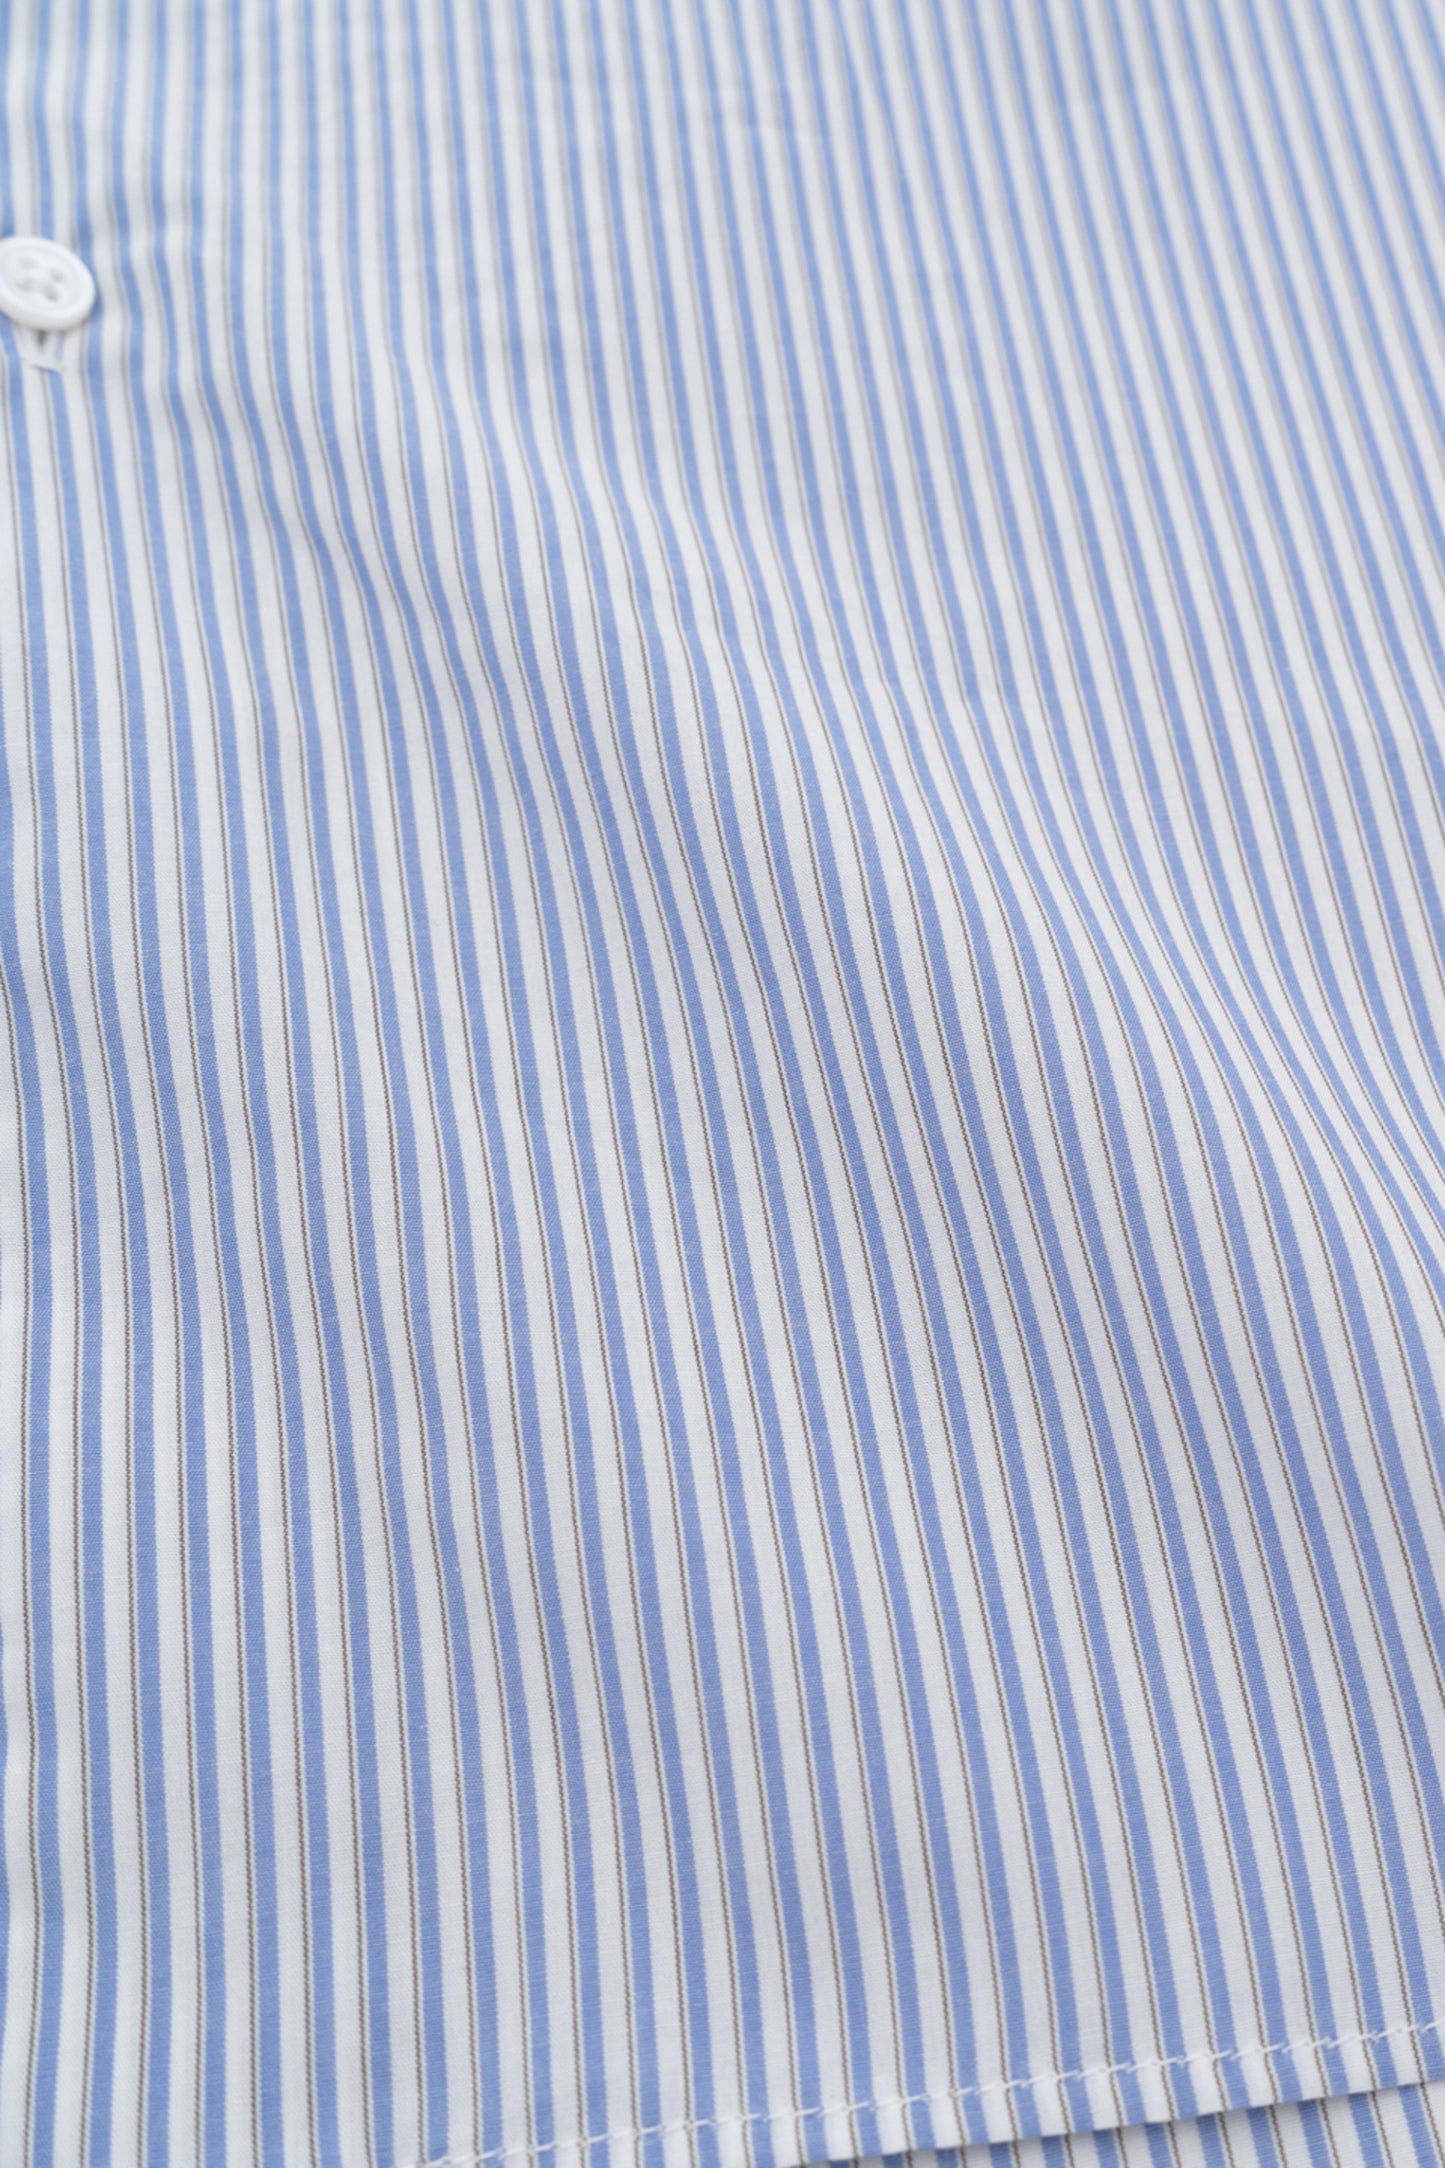 Still By Hand - Regular Collar Shirt (Blue Stripe)